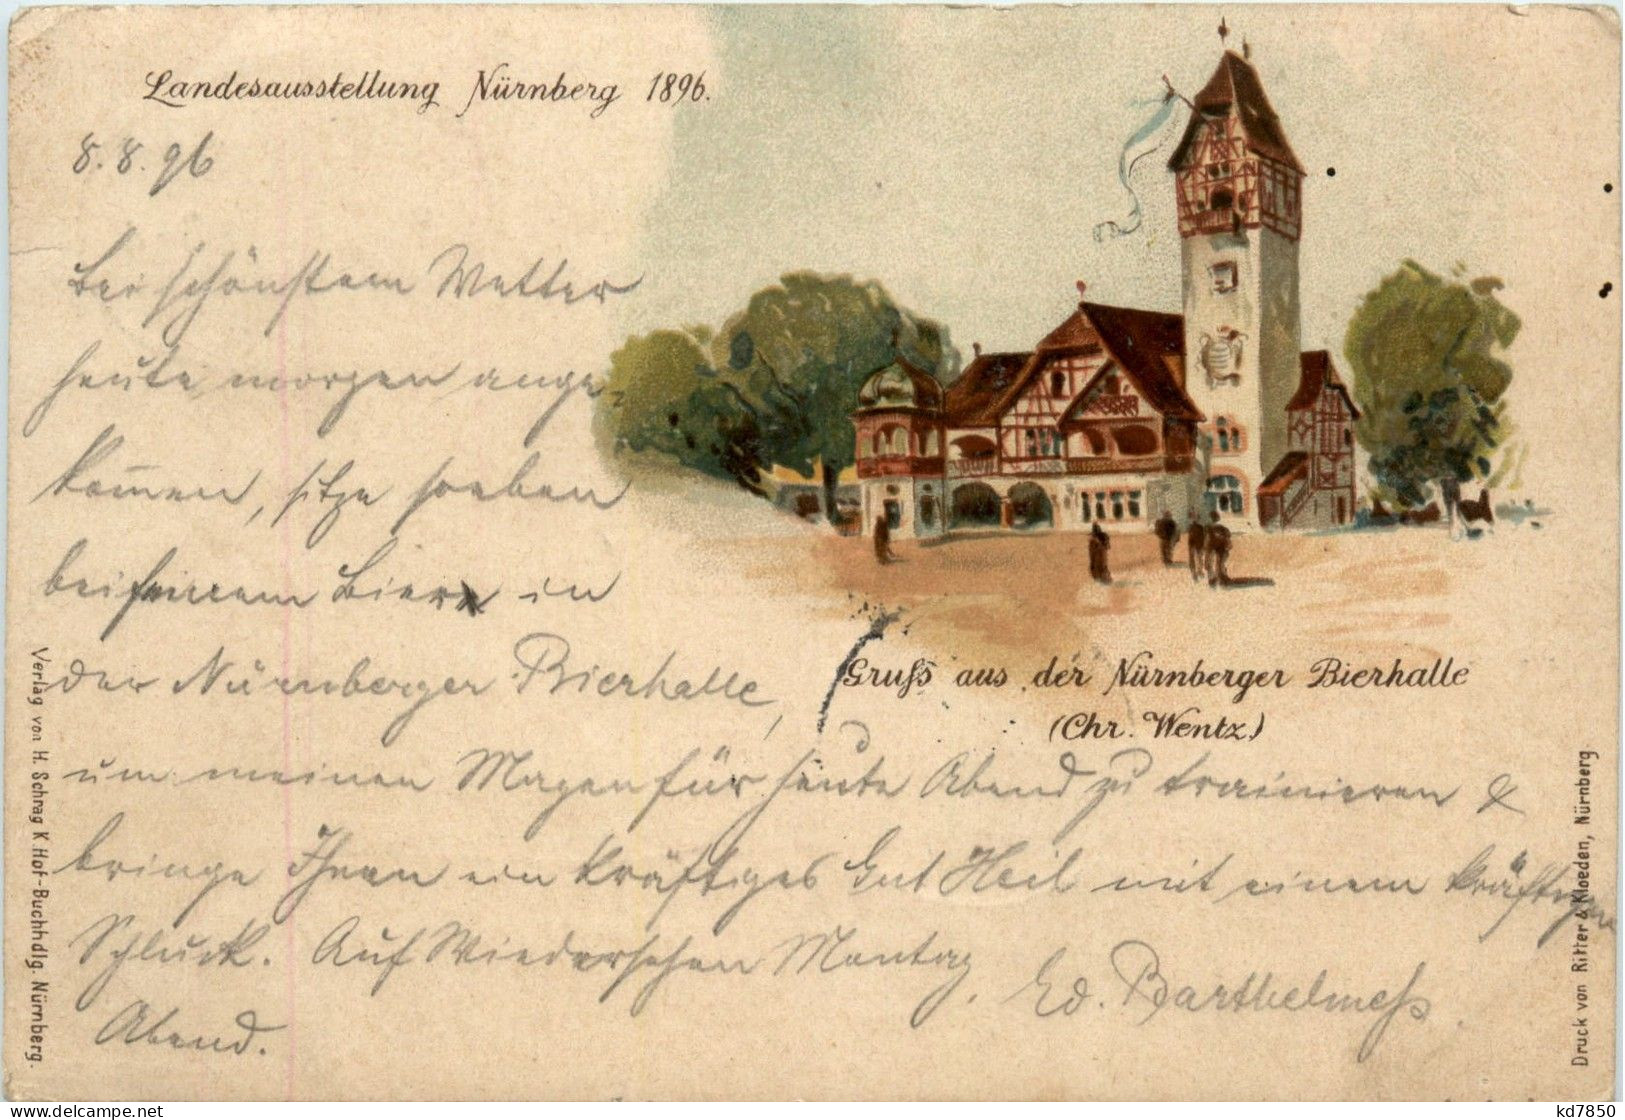 Landesaustellung Nürnberg 1896 Mit Sonderstempel - Nürnberg